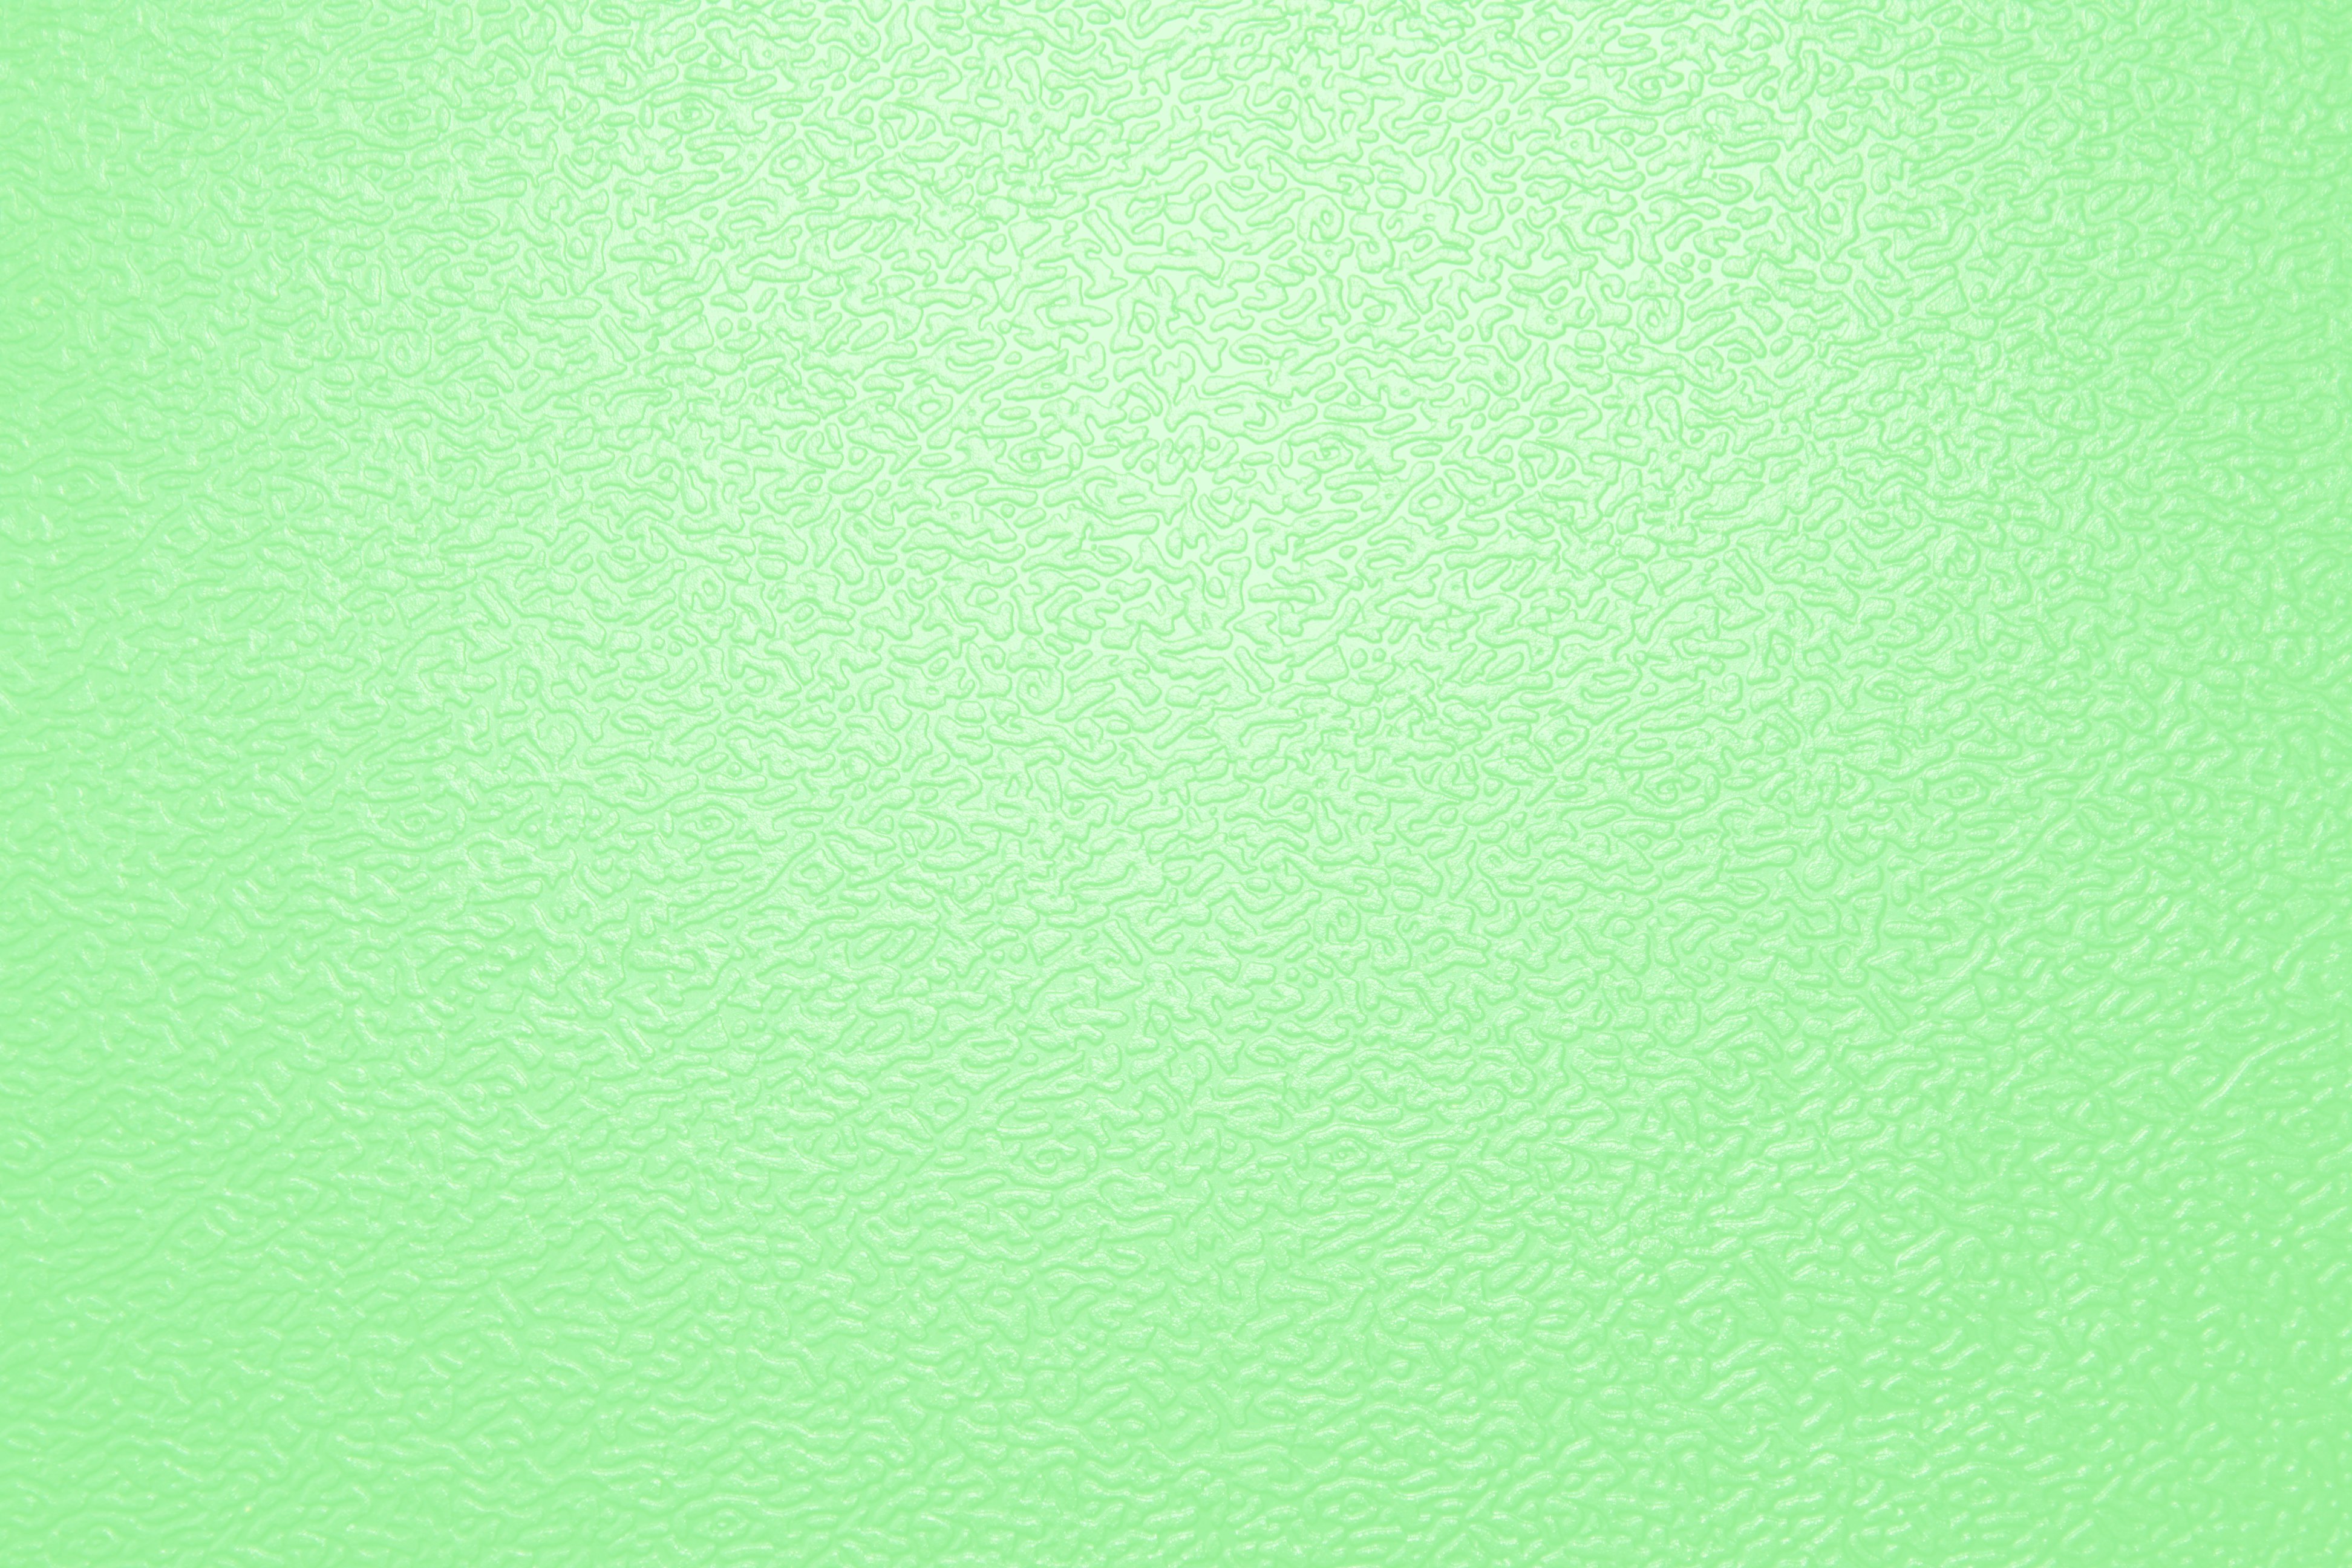 Textured Light Green Plastic Close Up   Free High Resolution Photo